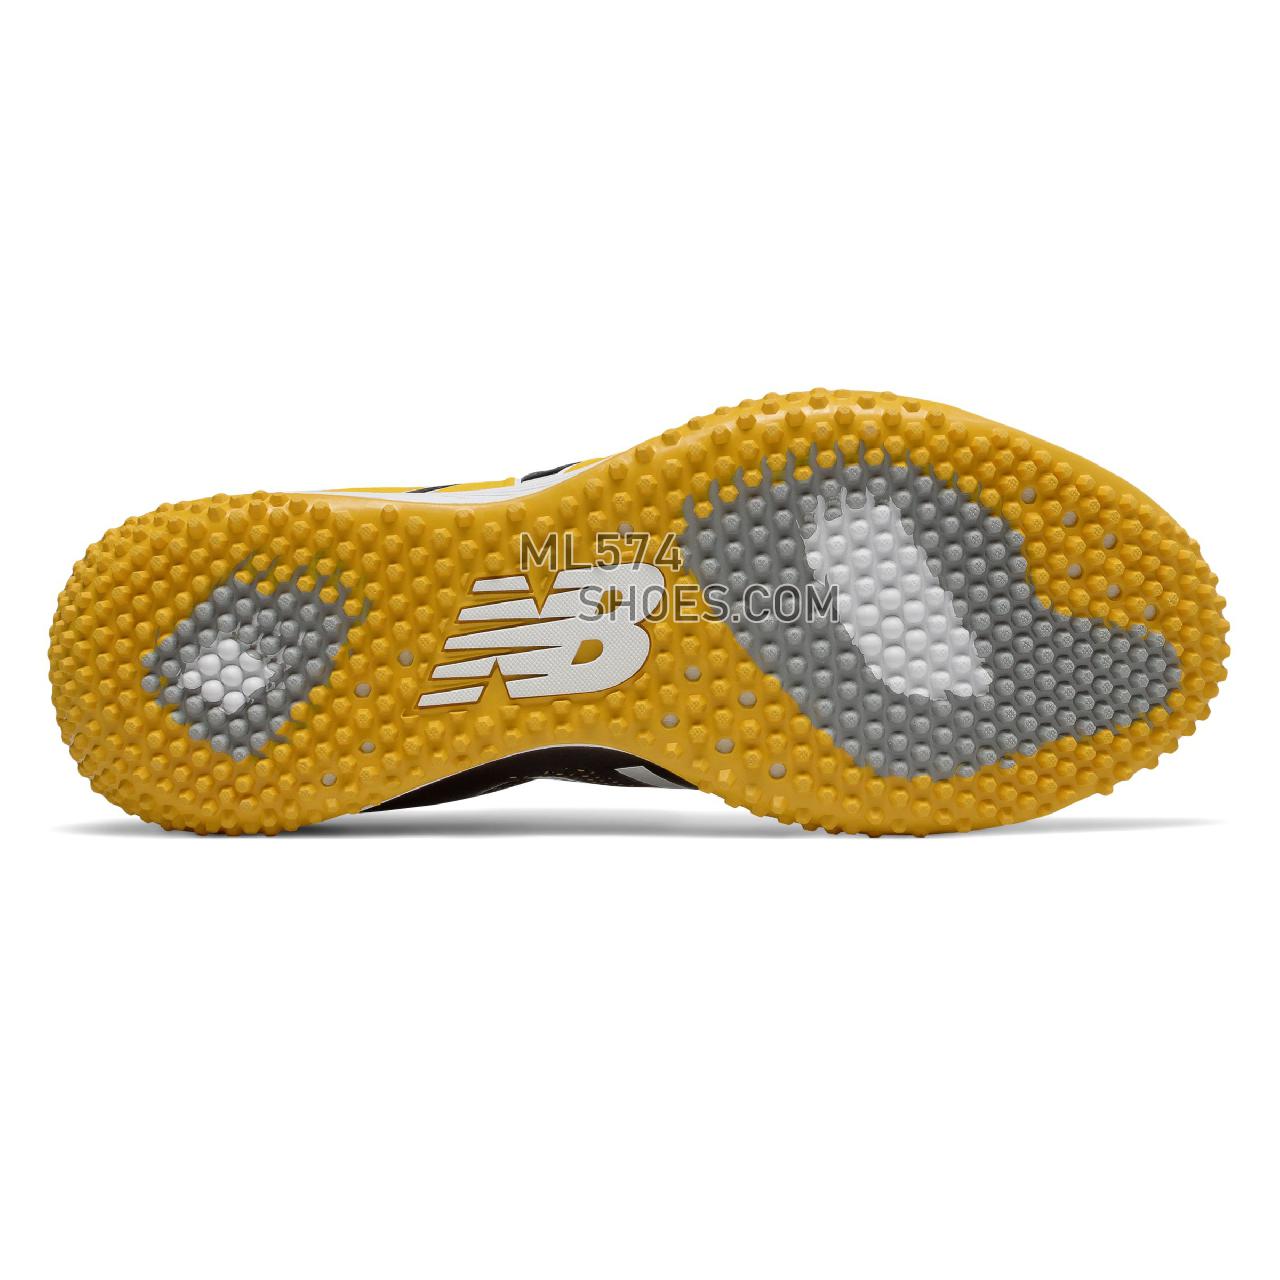 New Balance Turf 4040v4 - Men's 4040 - Baseball Black with Yellow - T4040BY4